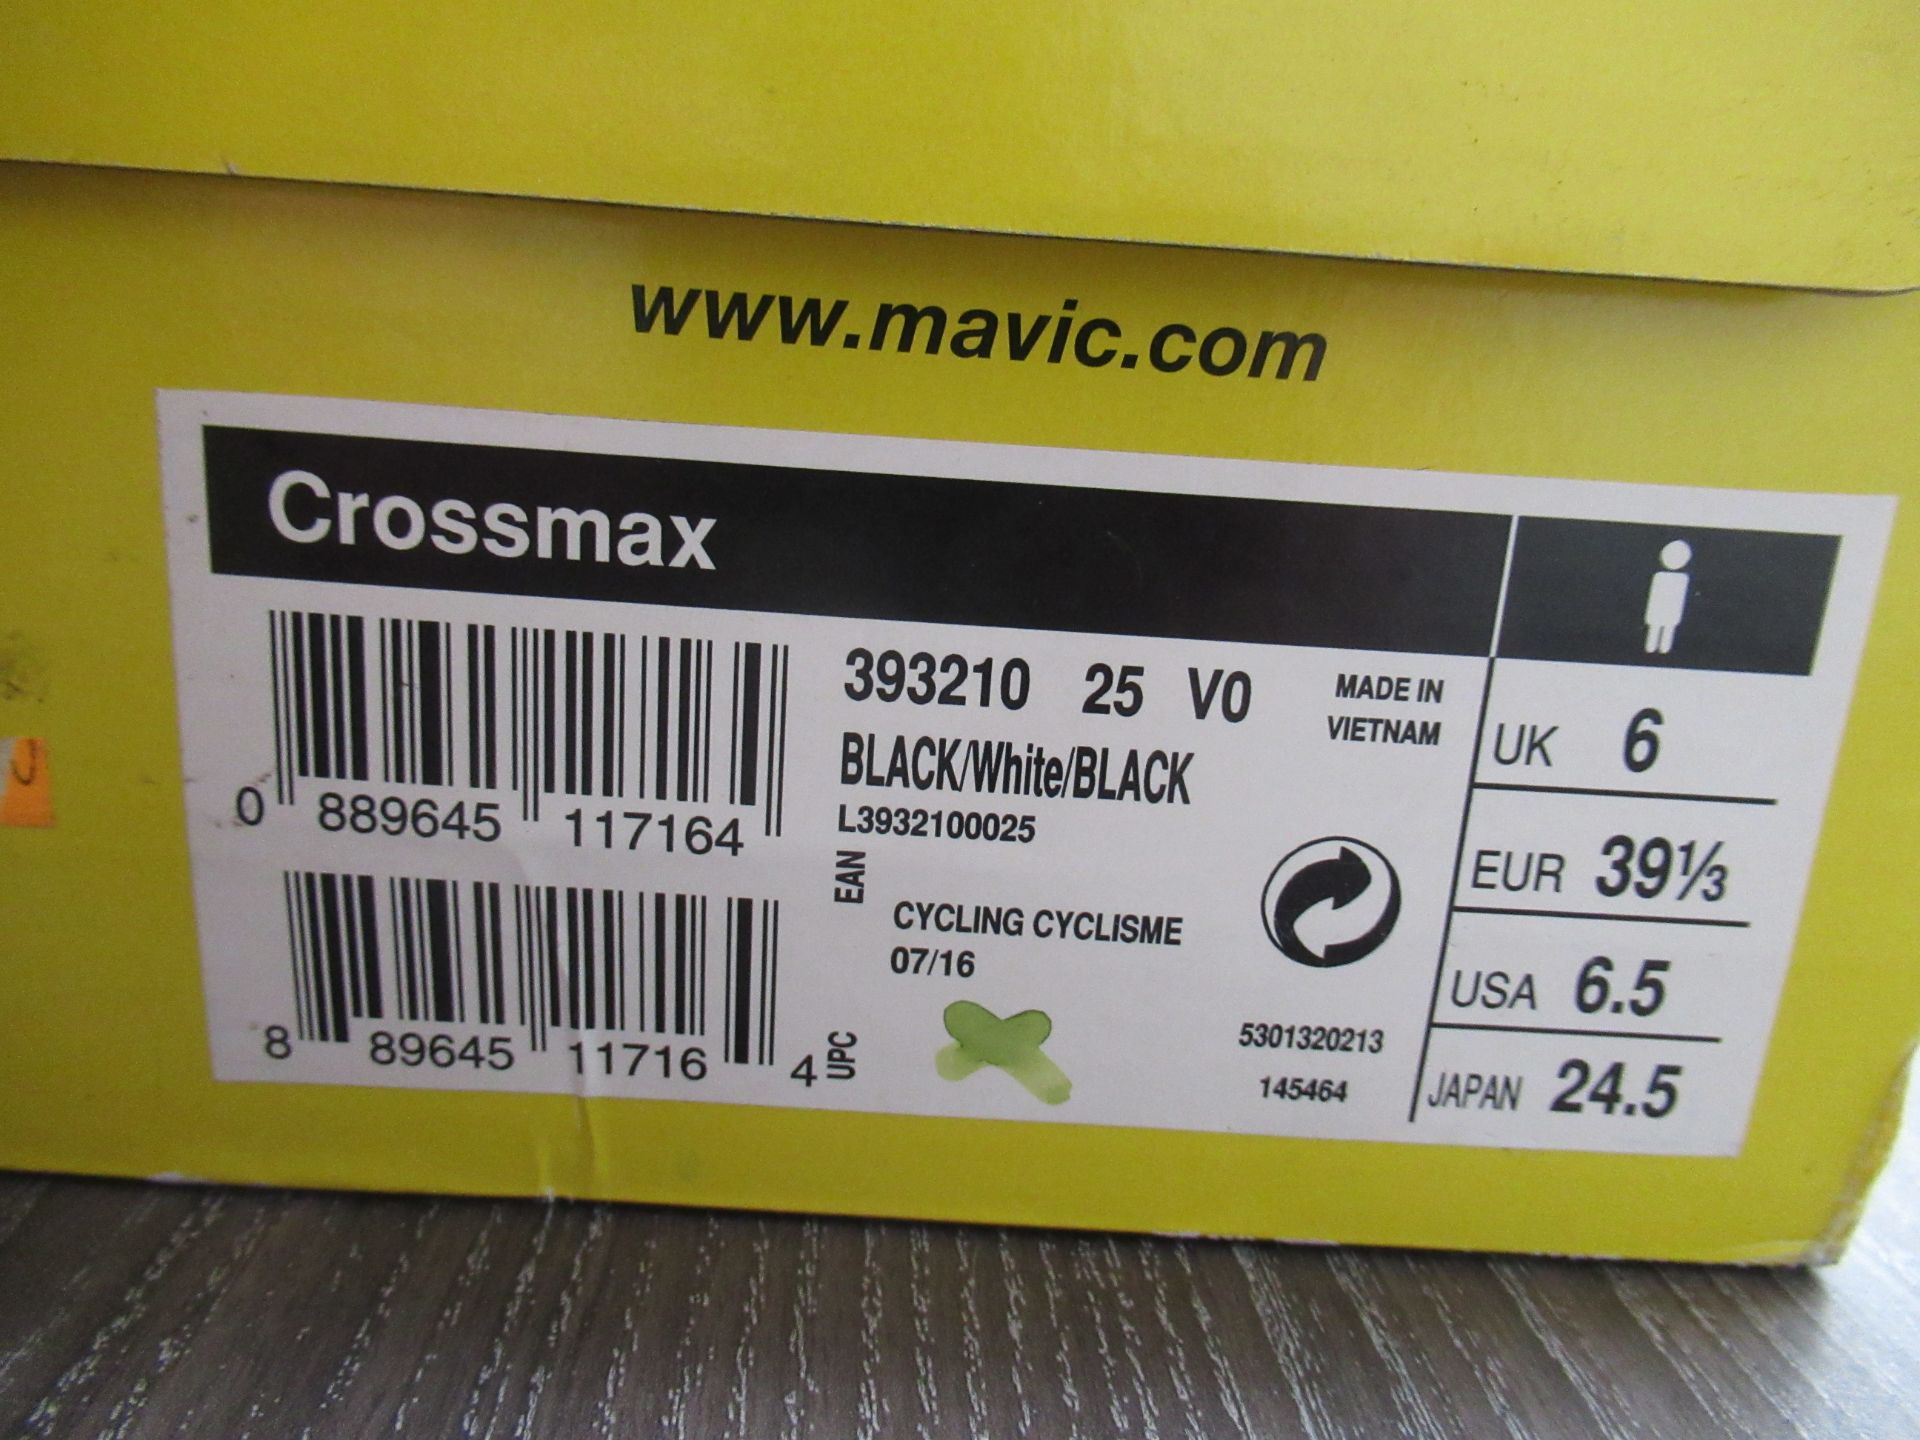 Pair of Mavic Crossmax cycling shoes (black/white/black) - boxed EU size 39 1/3 (RRP£90) - Image 3 of 4